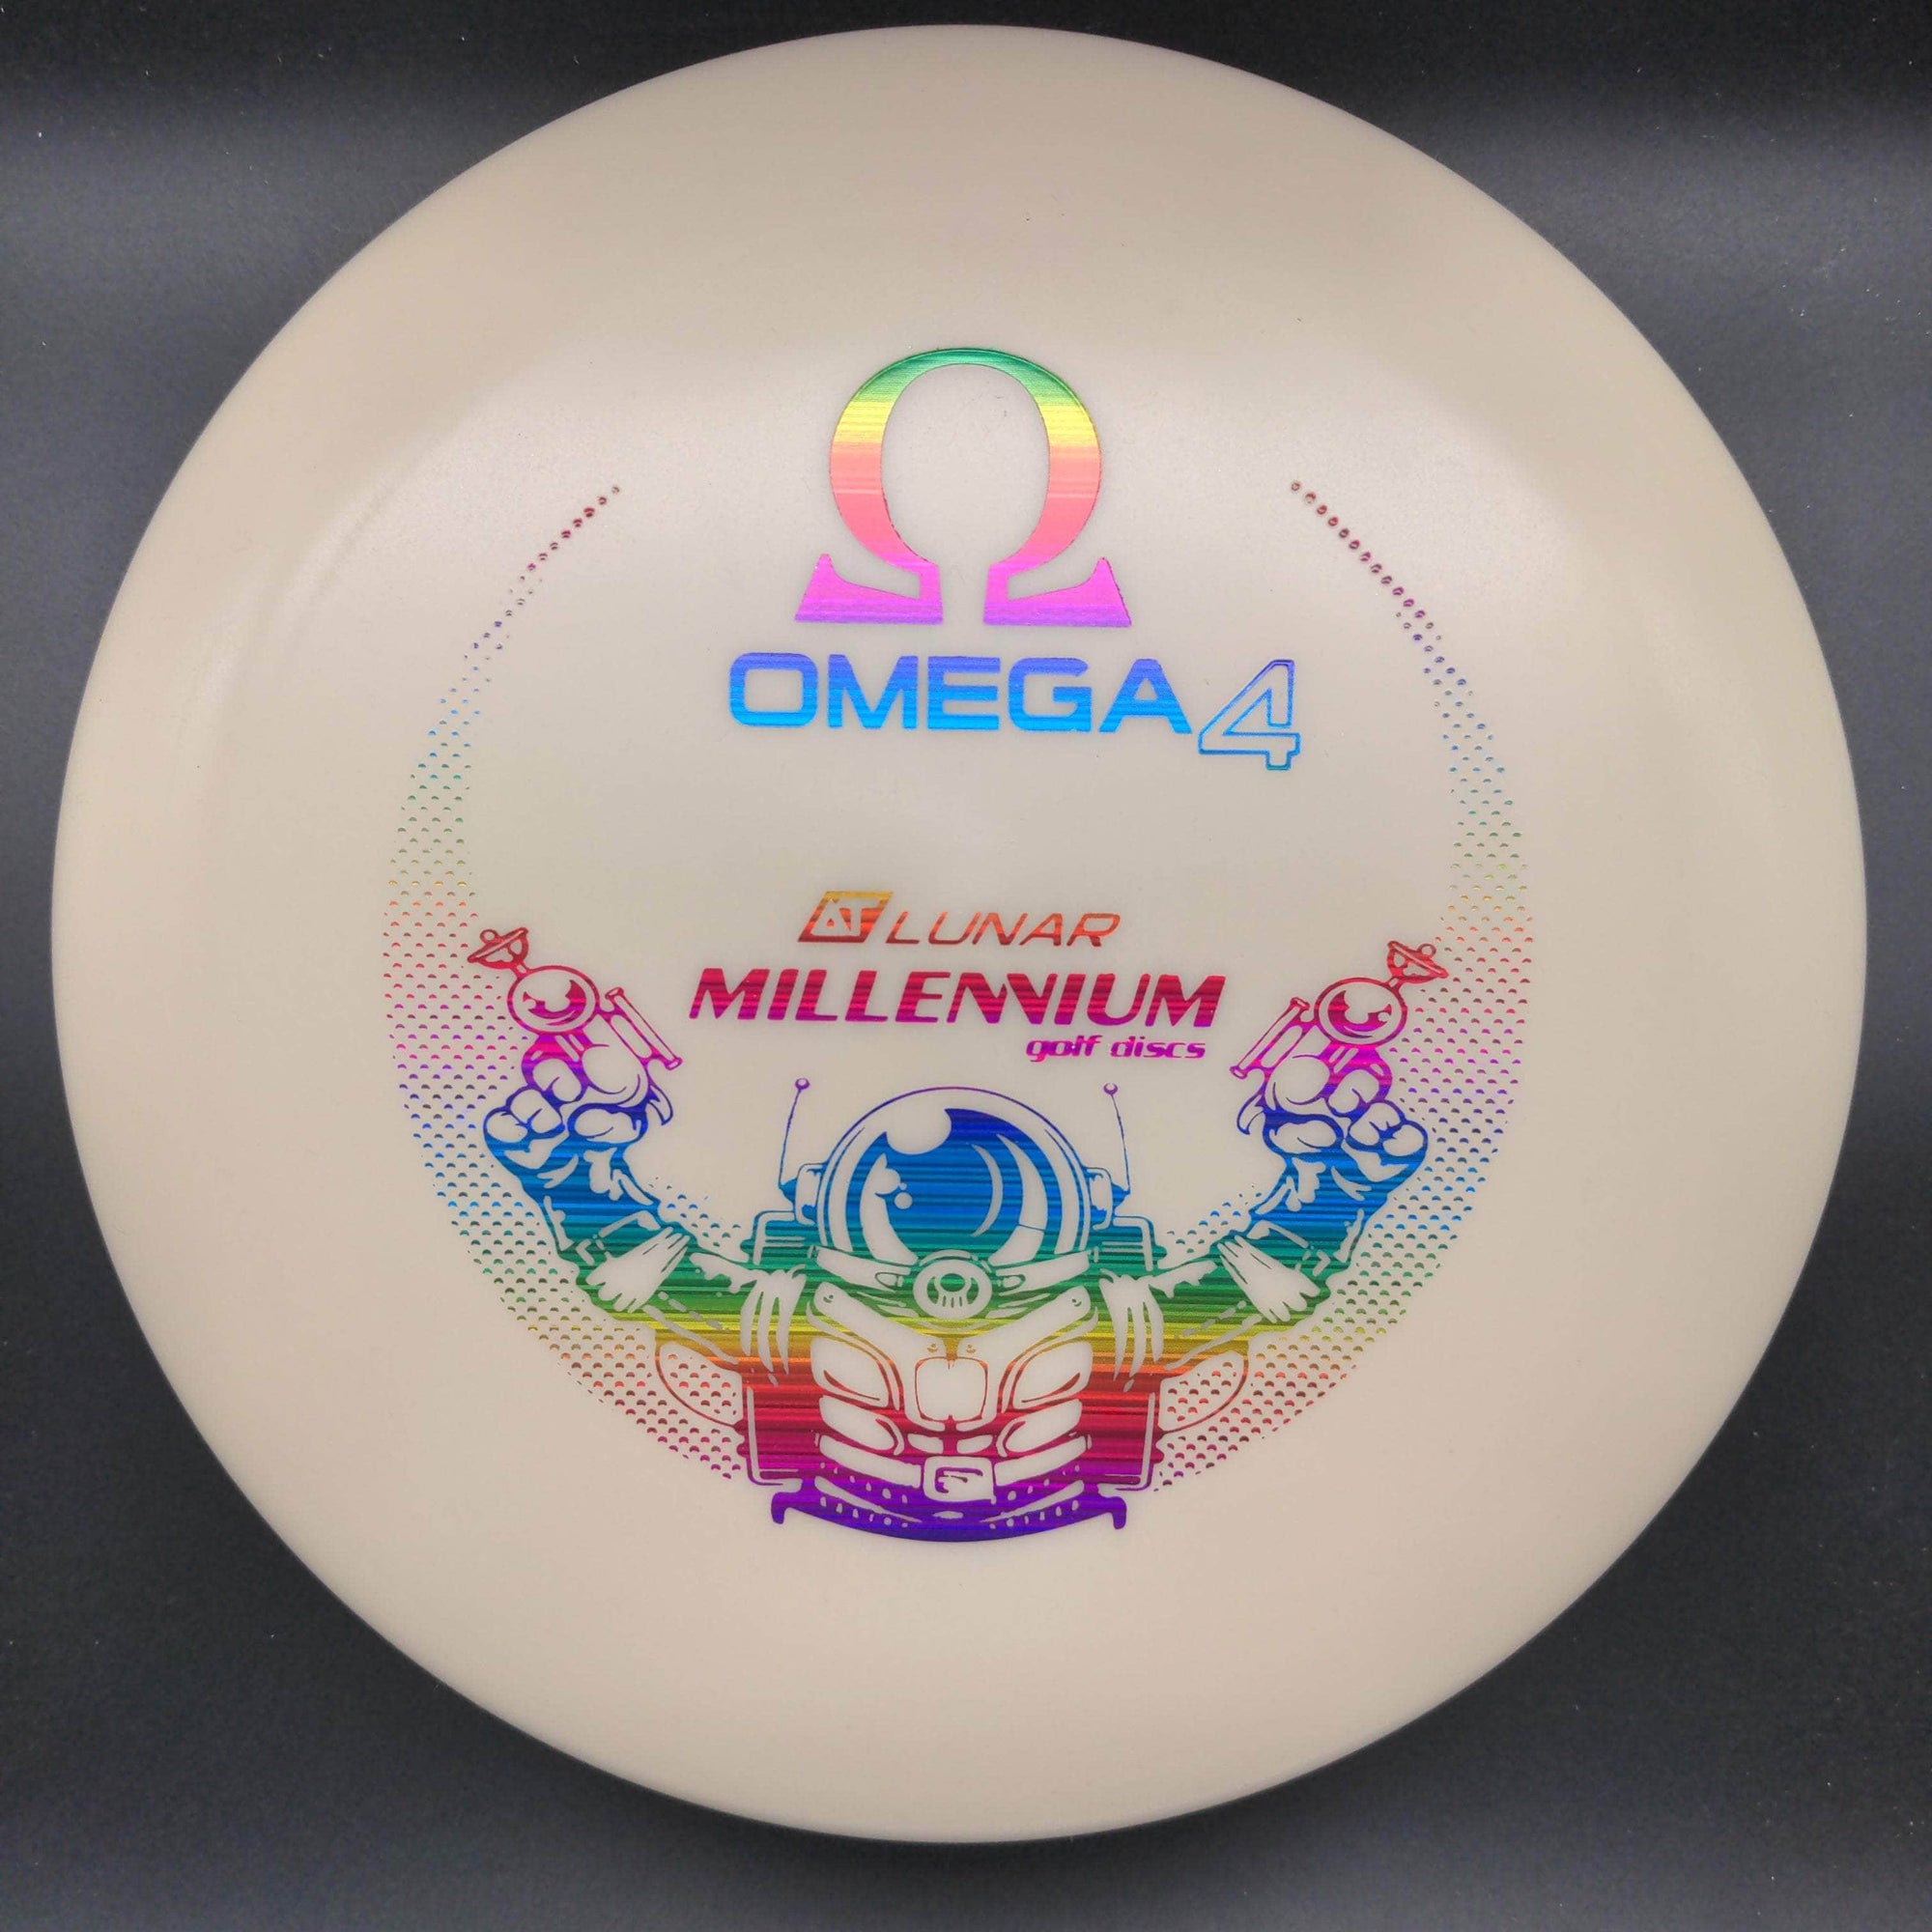 Millennium Discs Putter Glow Rainbow Stamp 175g 2 Omega - Delta-T Lunar Plastic